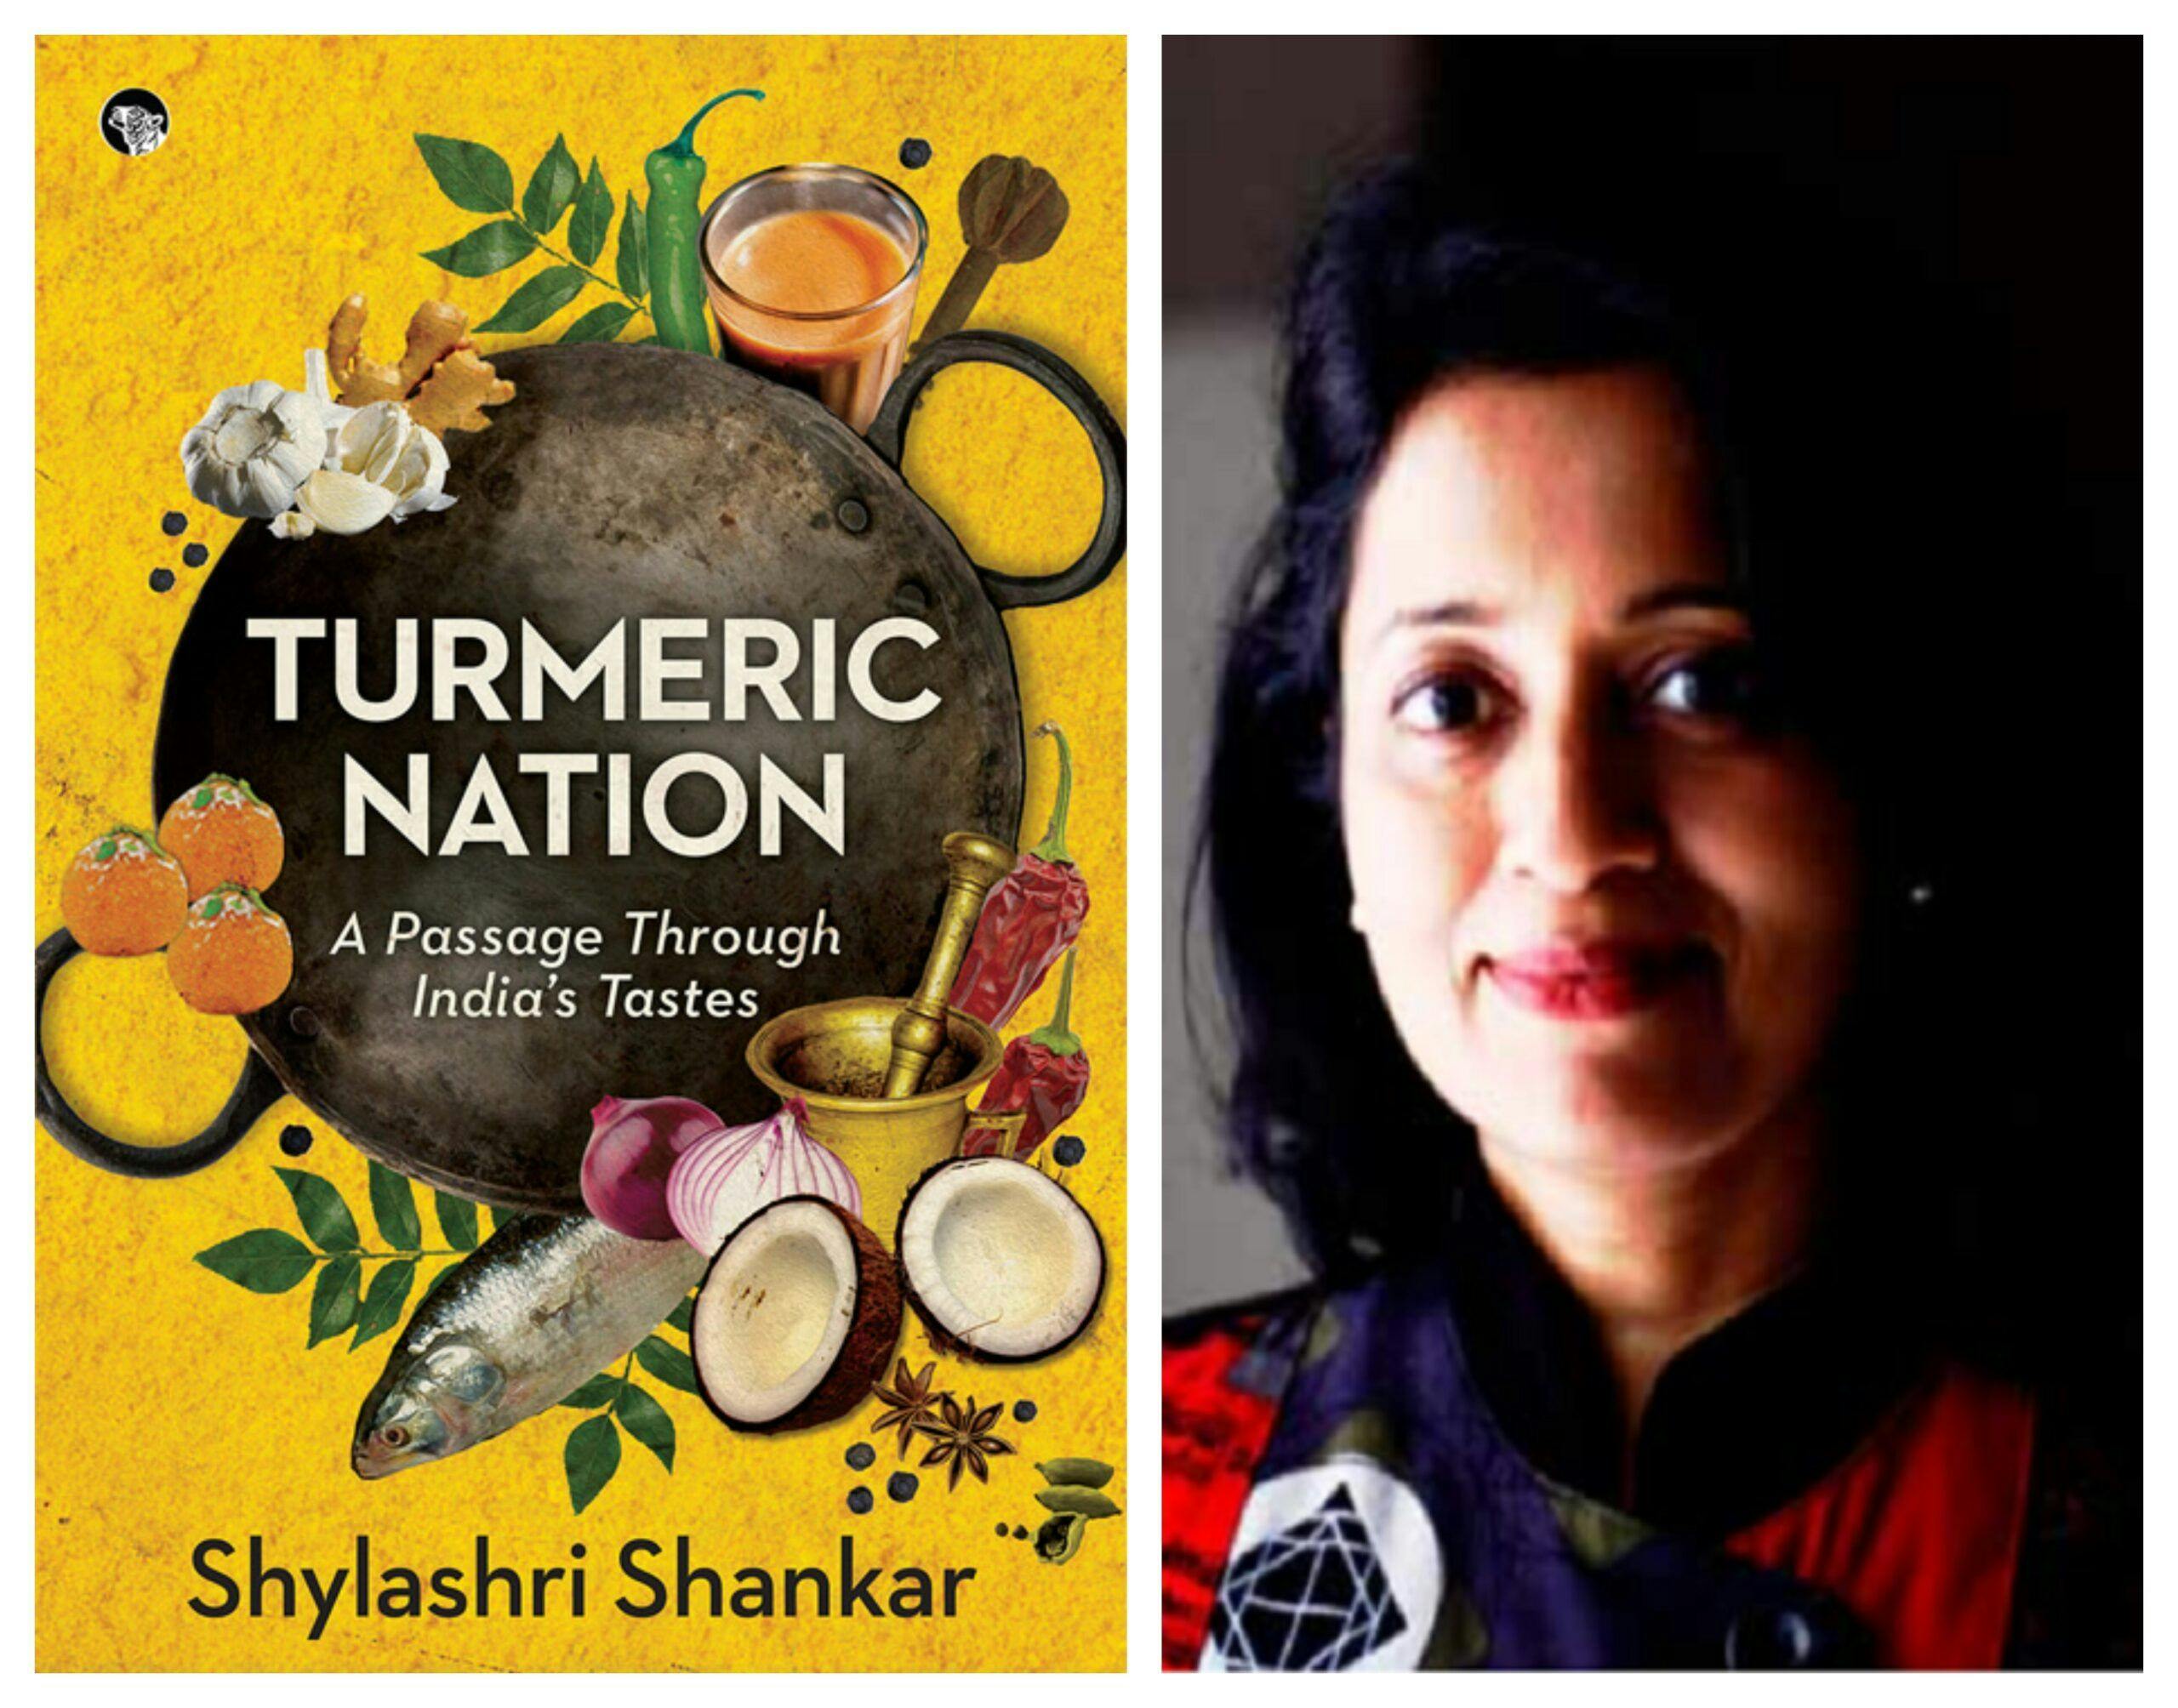 Turmeric Nation: A Passage Through India's Tastes by author Shylashri Shankar